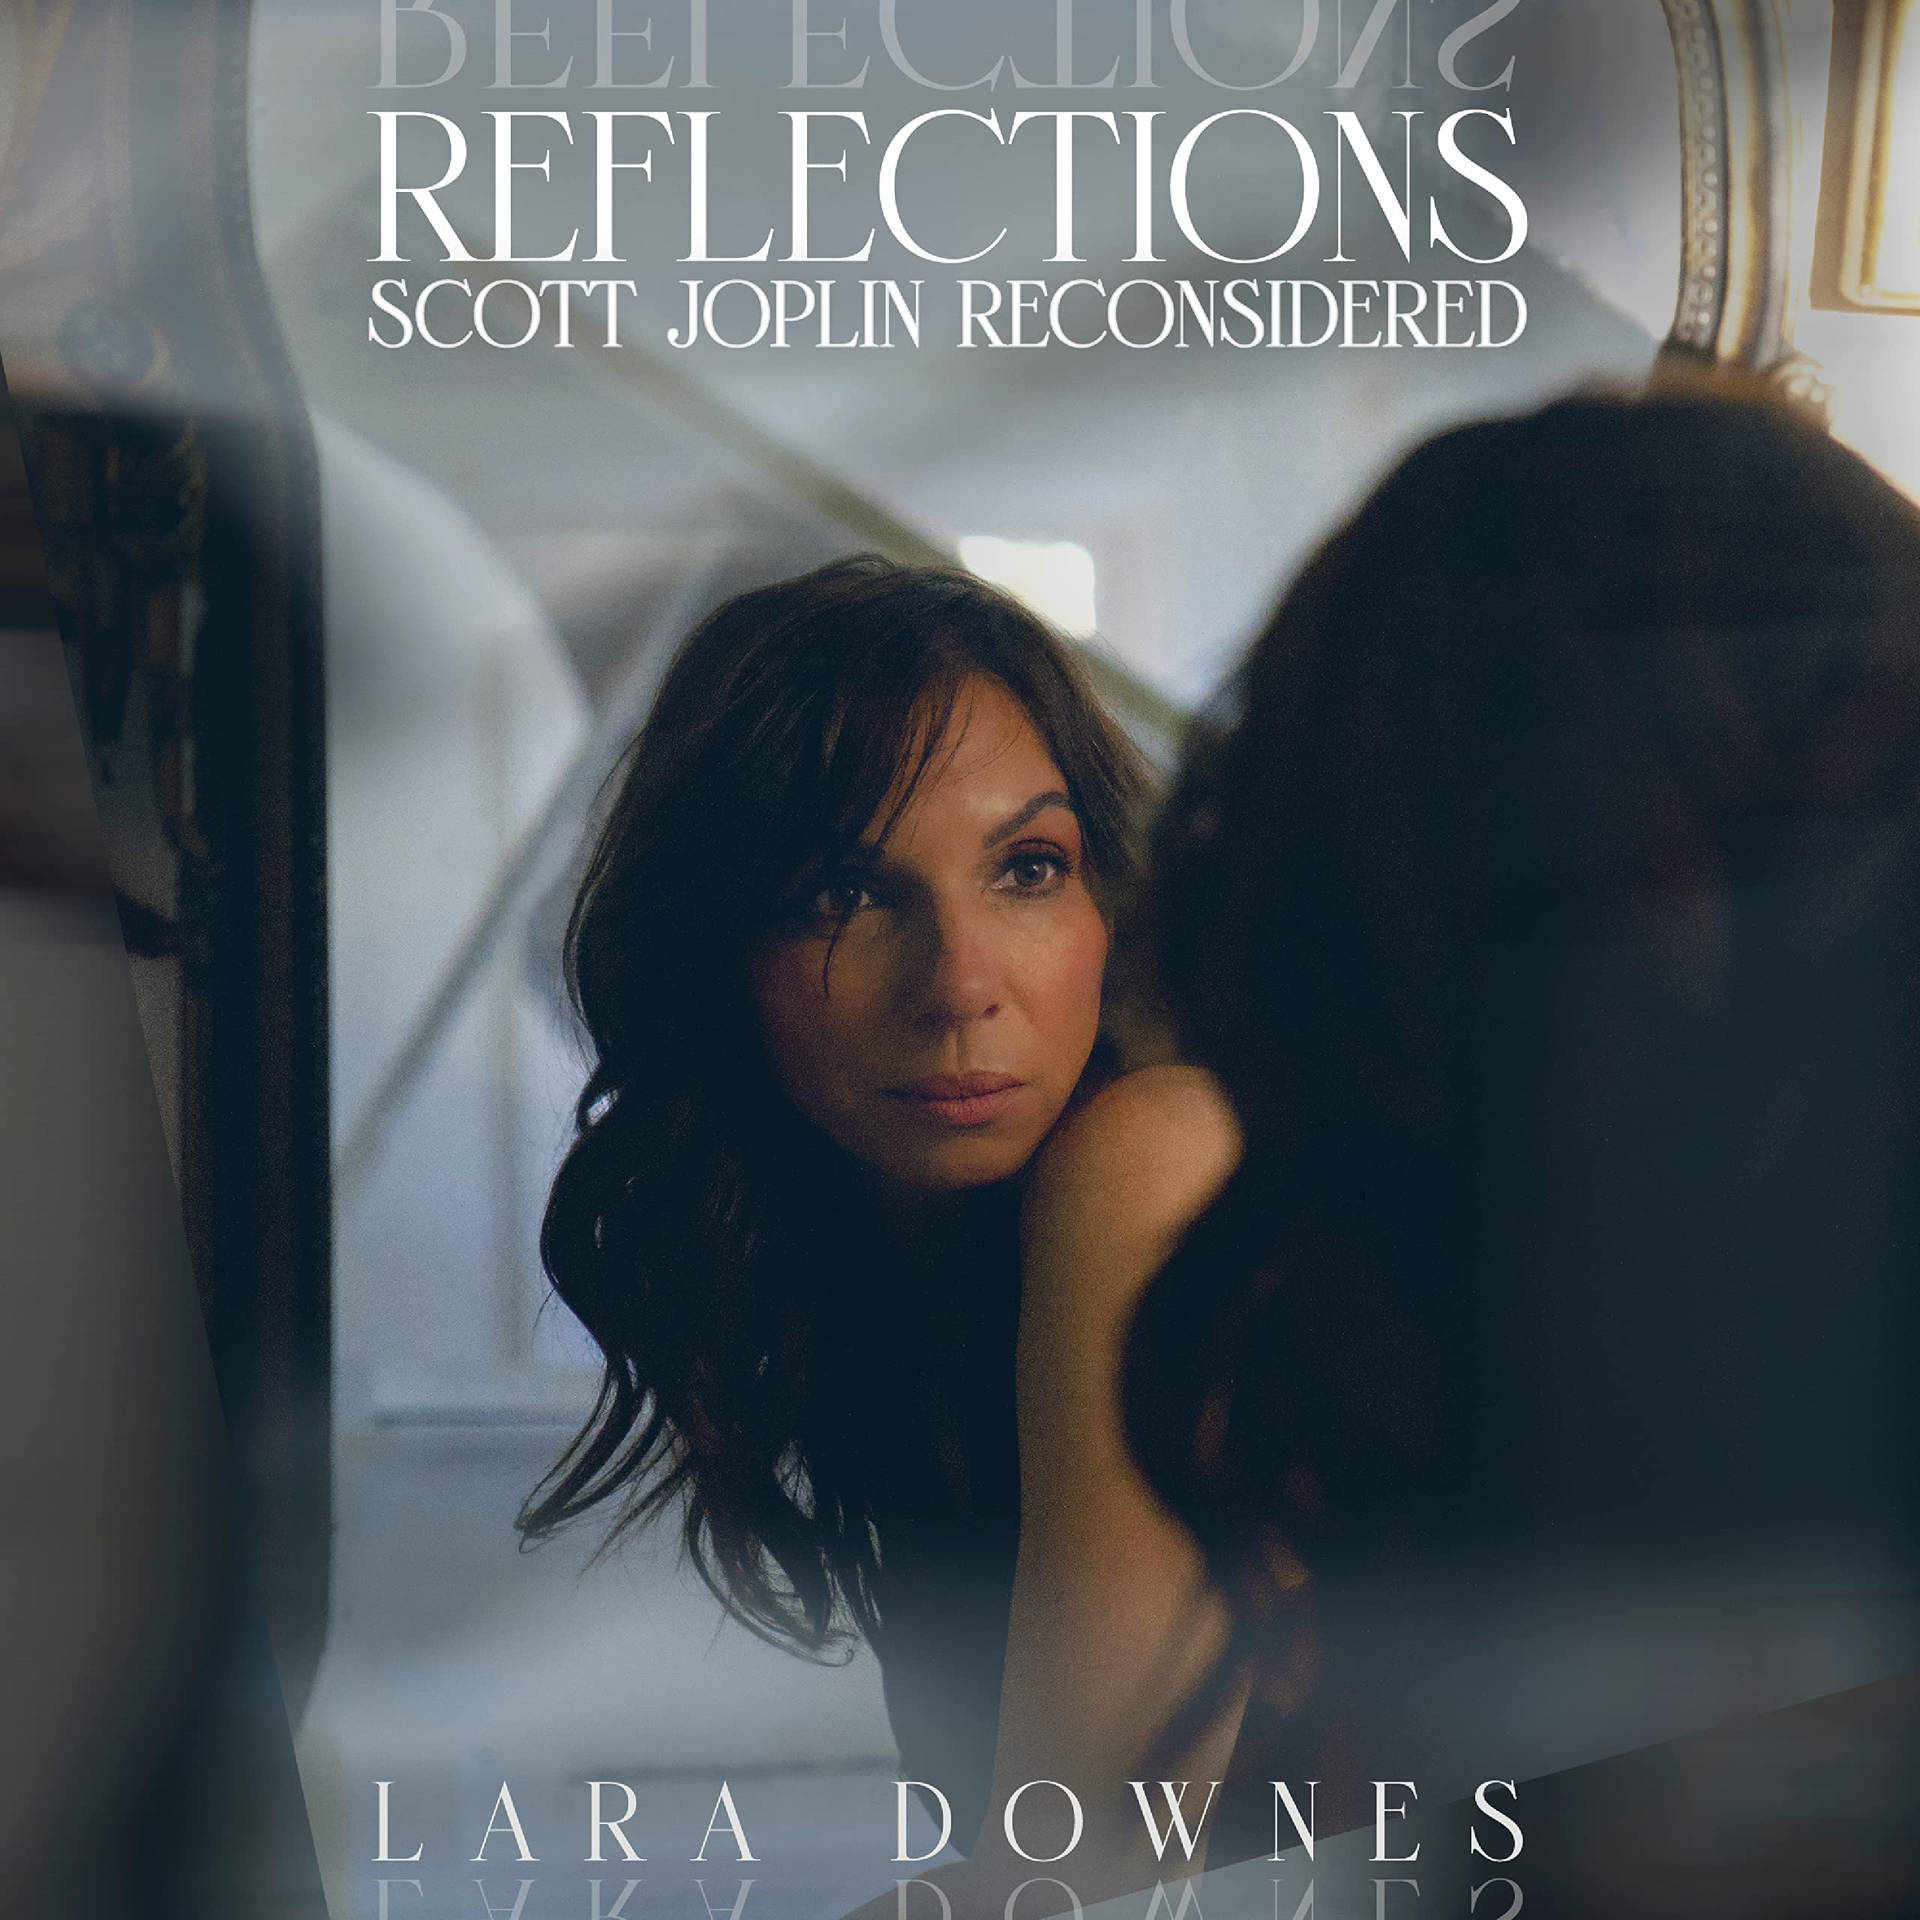 Lara Downes Reflections Scott Joplin Reconsidered Album Cover Wallpaper